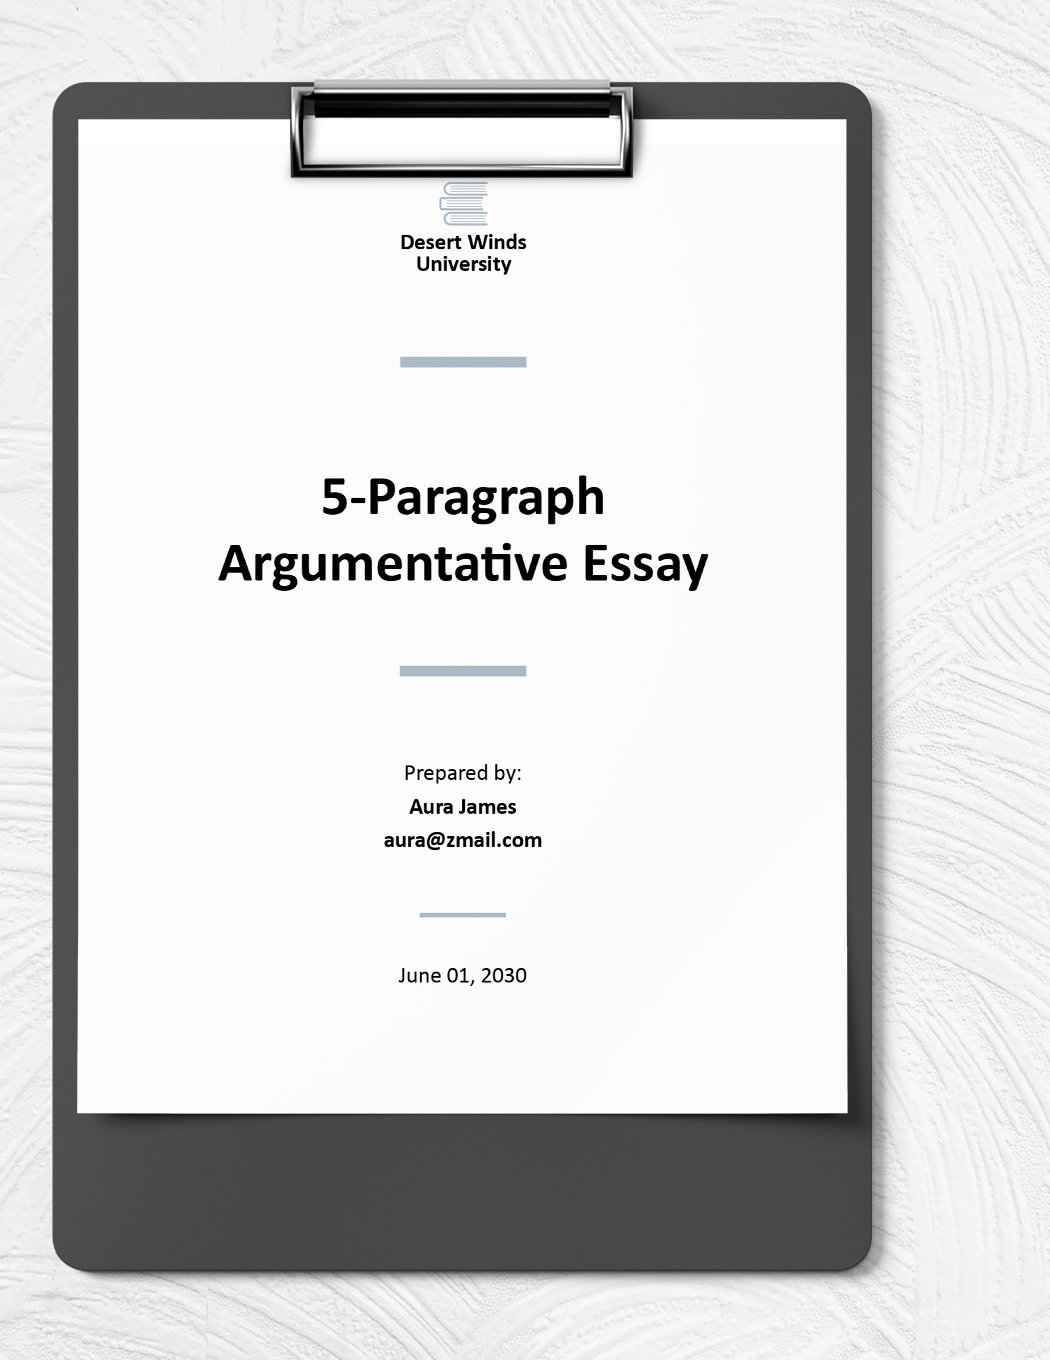 5-Paragraph Argumentative Essay Template in Word, Google Docs